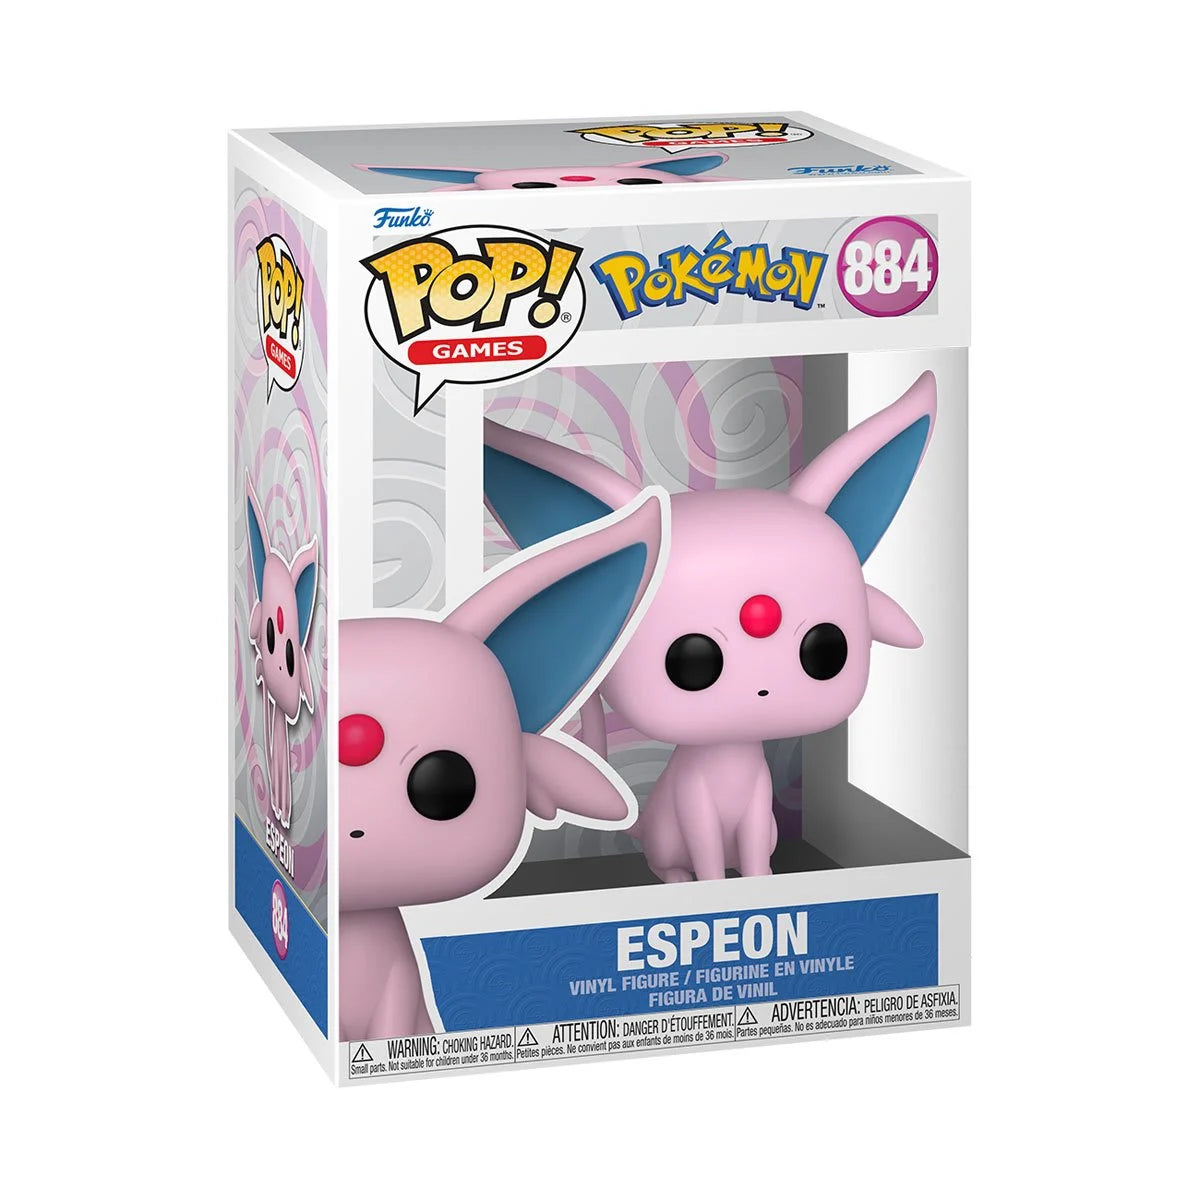 Espeon Pokémon Pop! Vinyl Figure